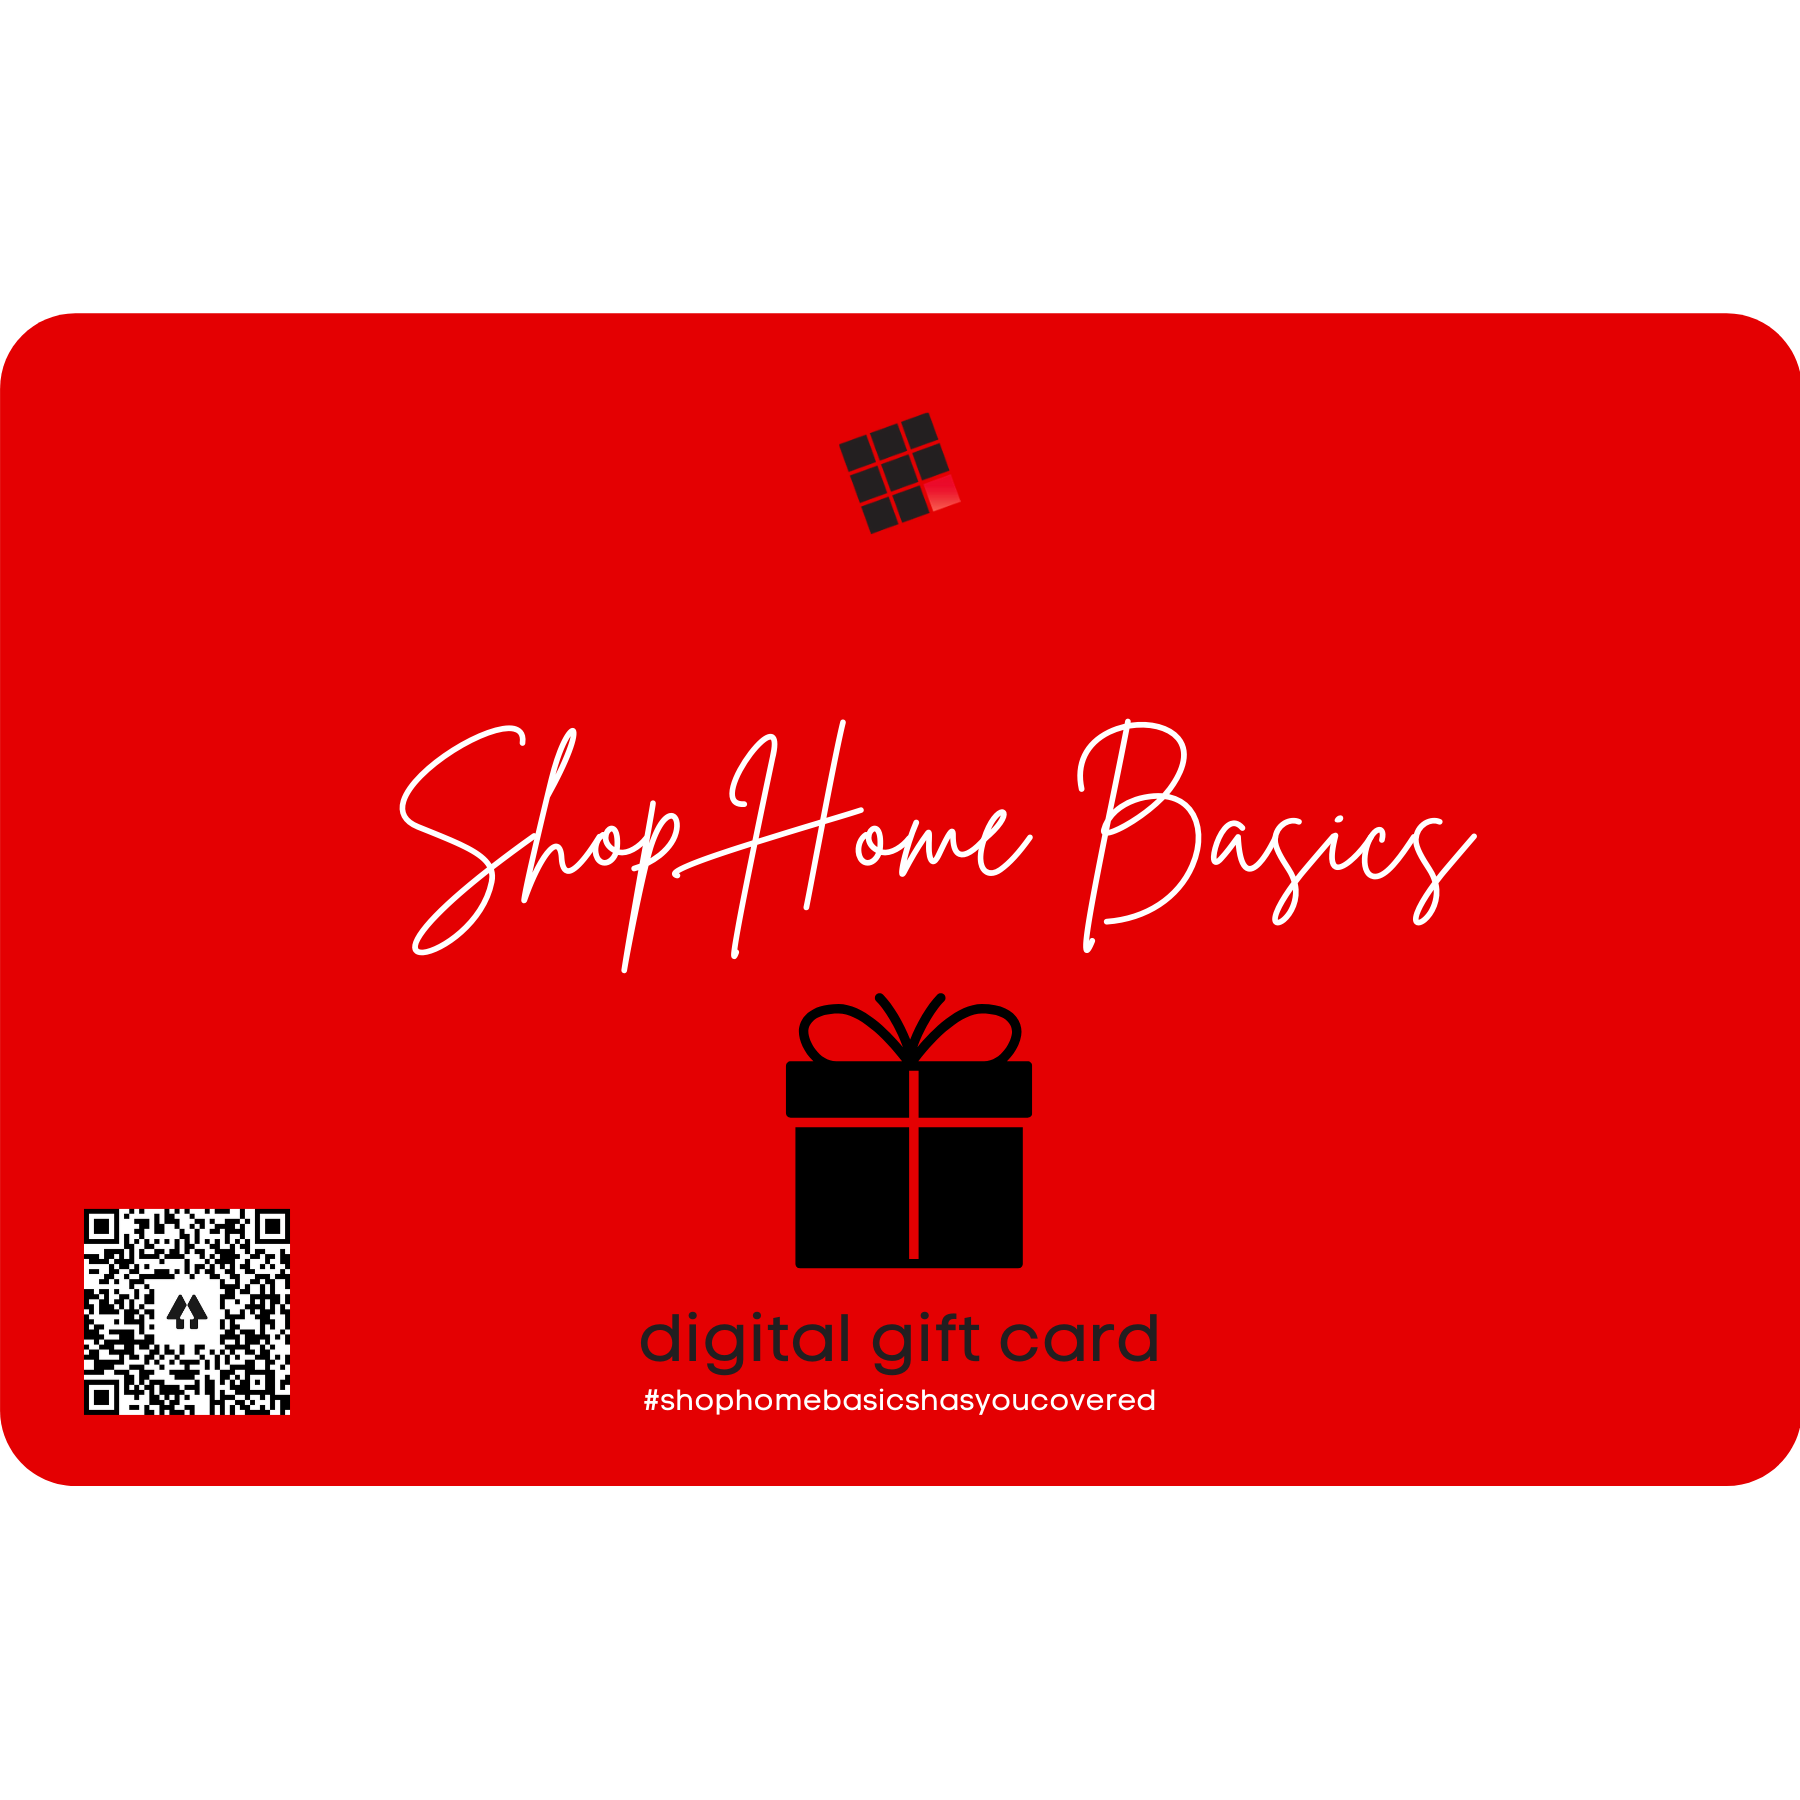 Shop Home Basics Gift Card - Shop Home Basics